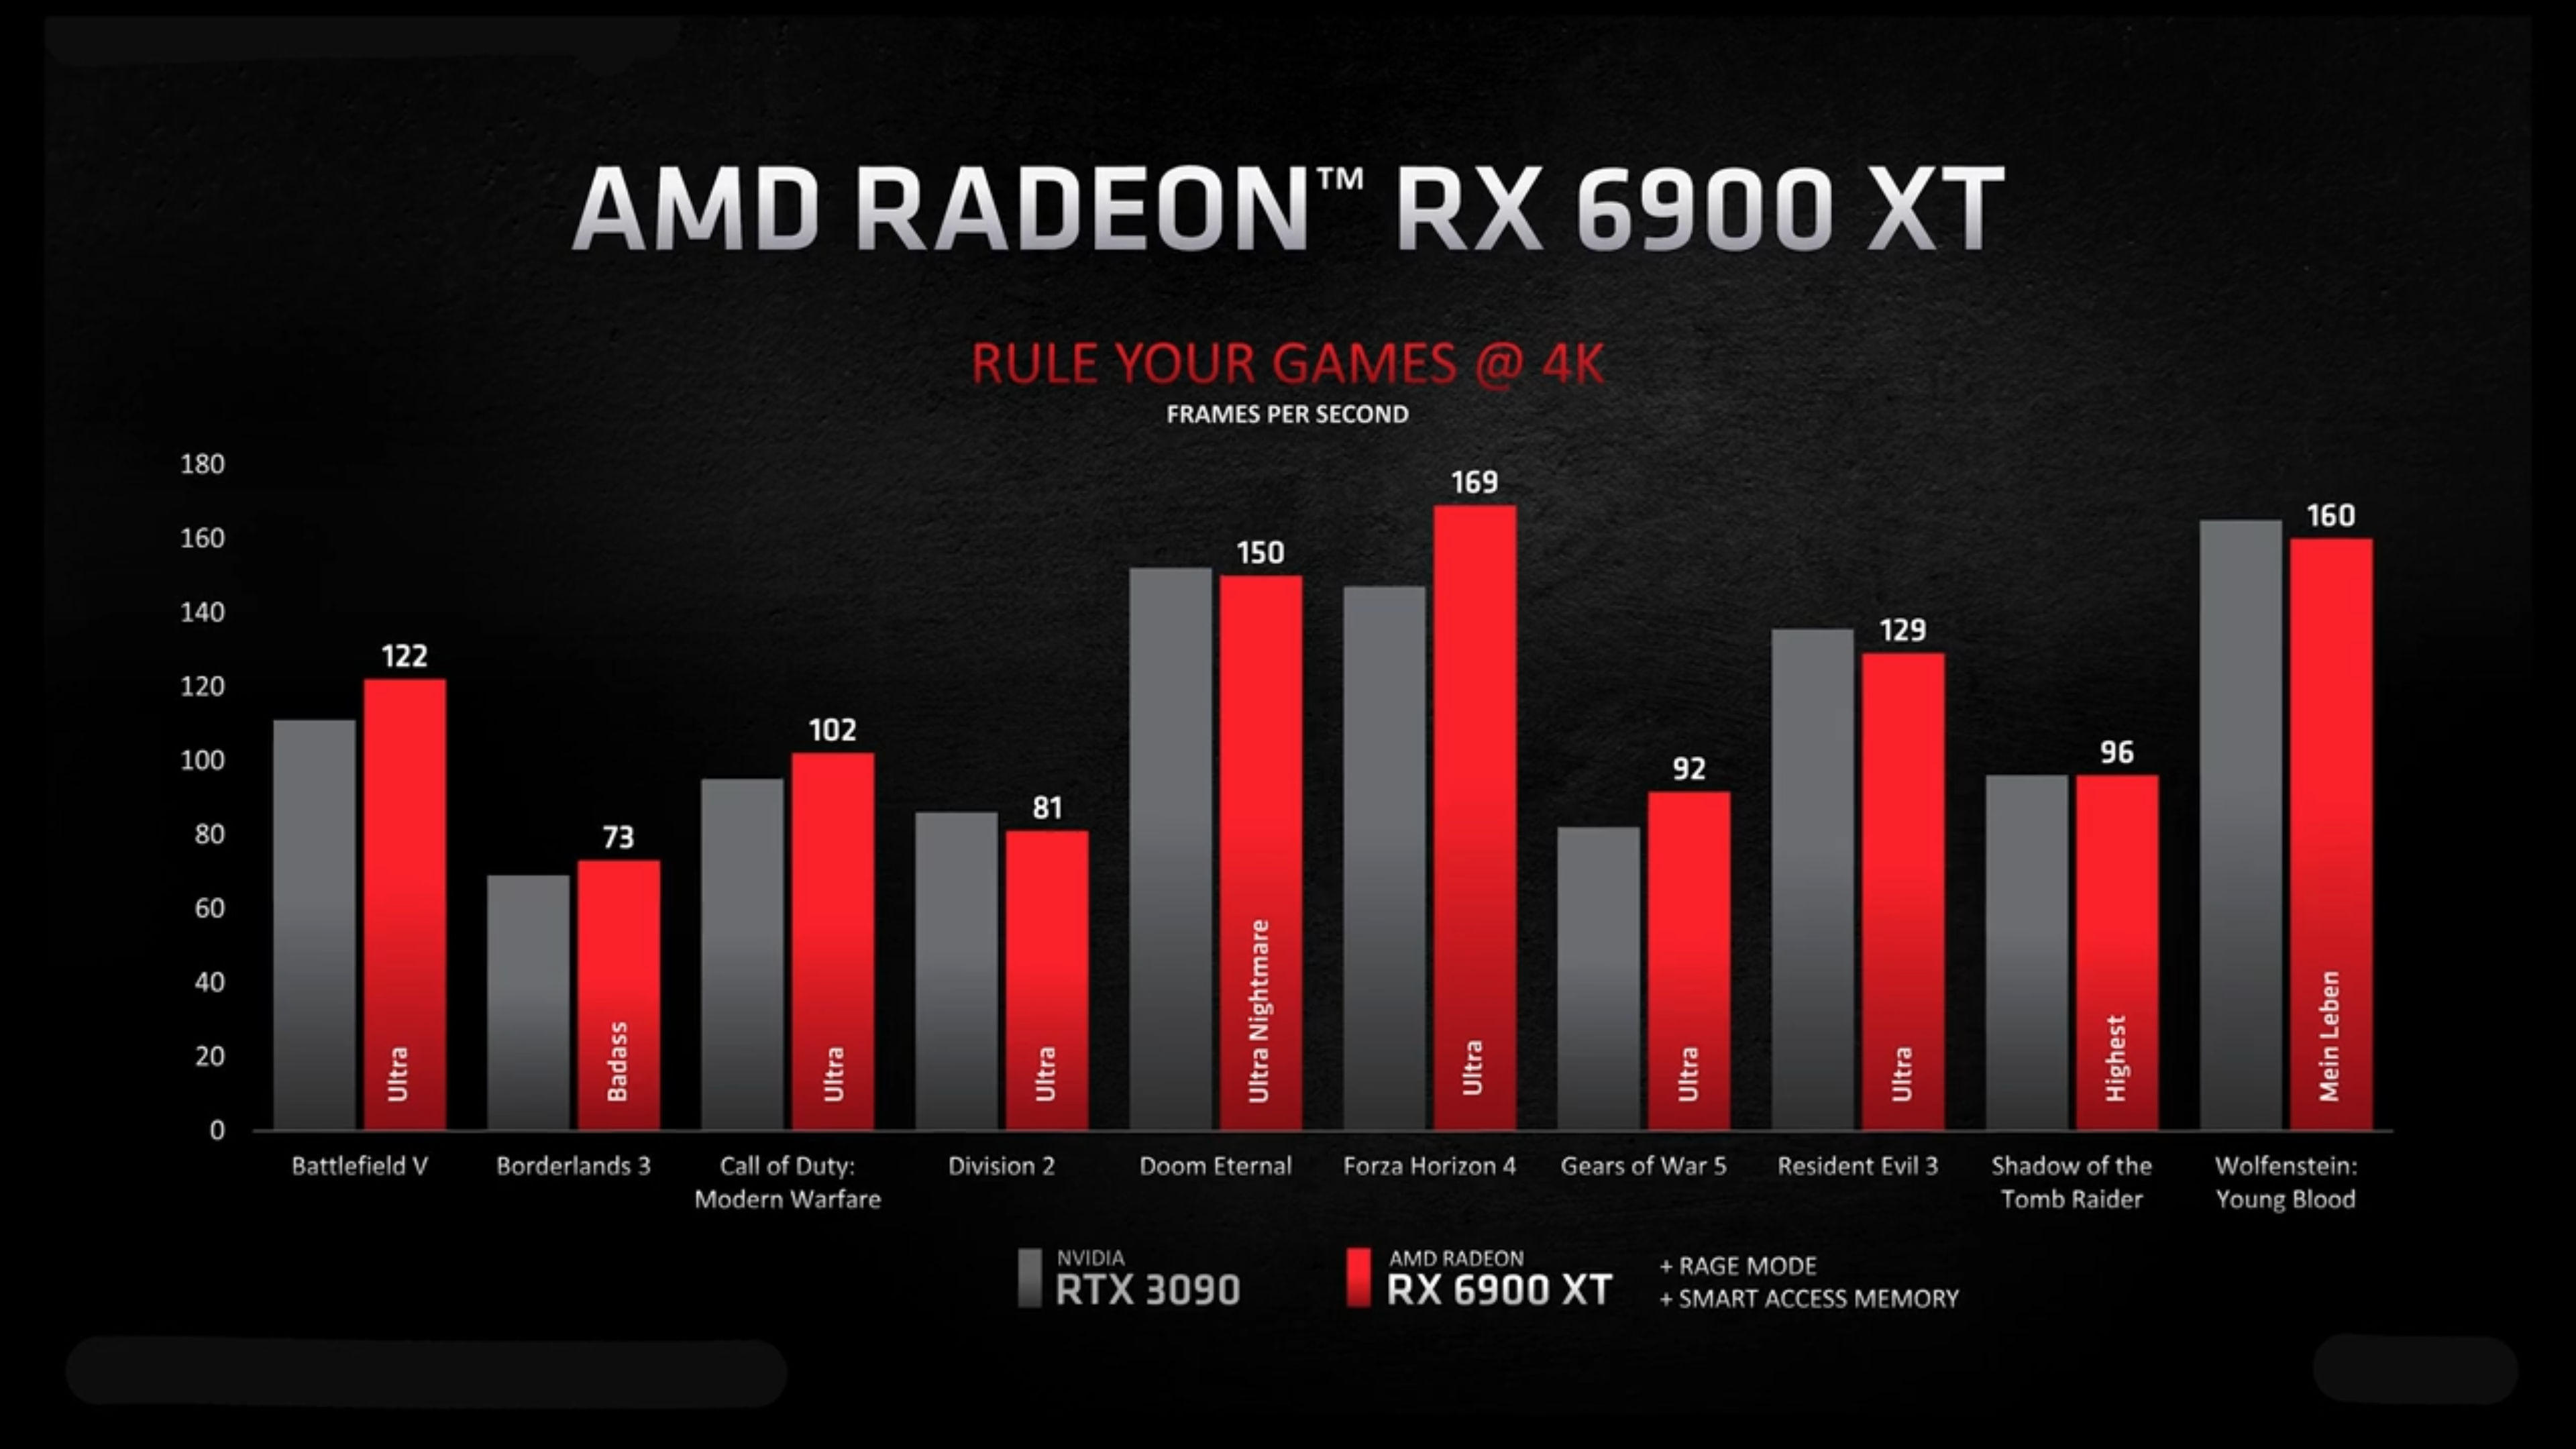 AMD Radeon RX 6900 XT 4K performance framerates comparison screenshot